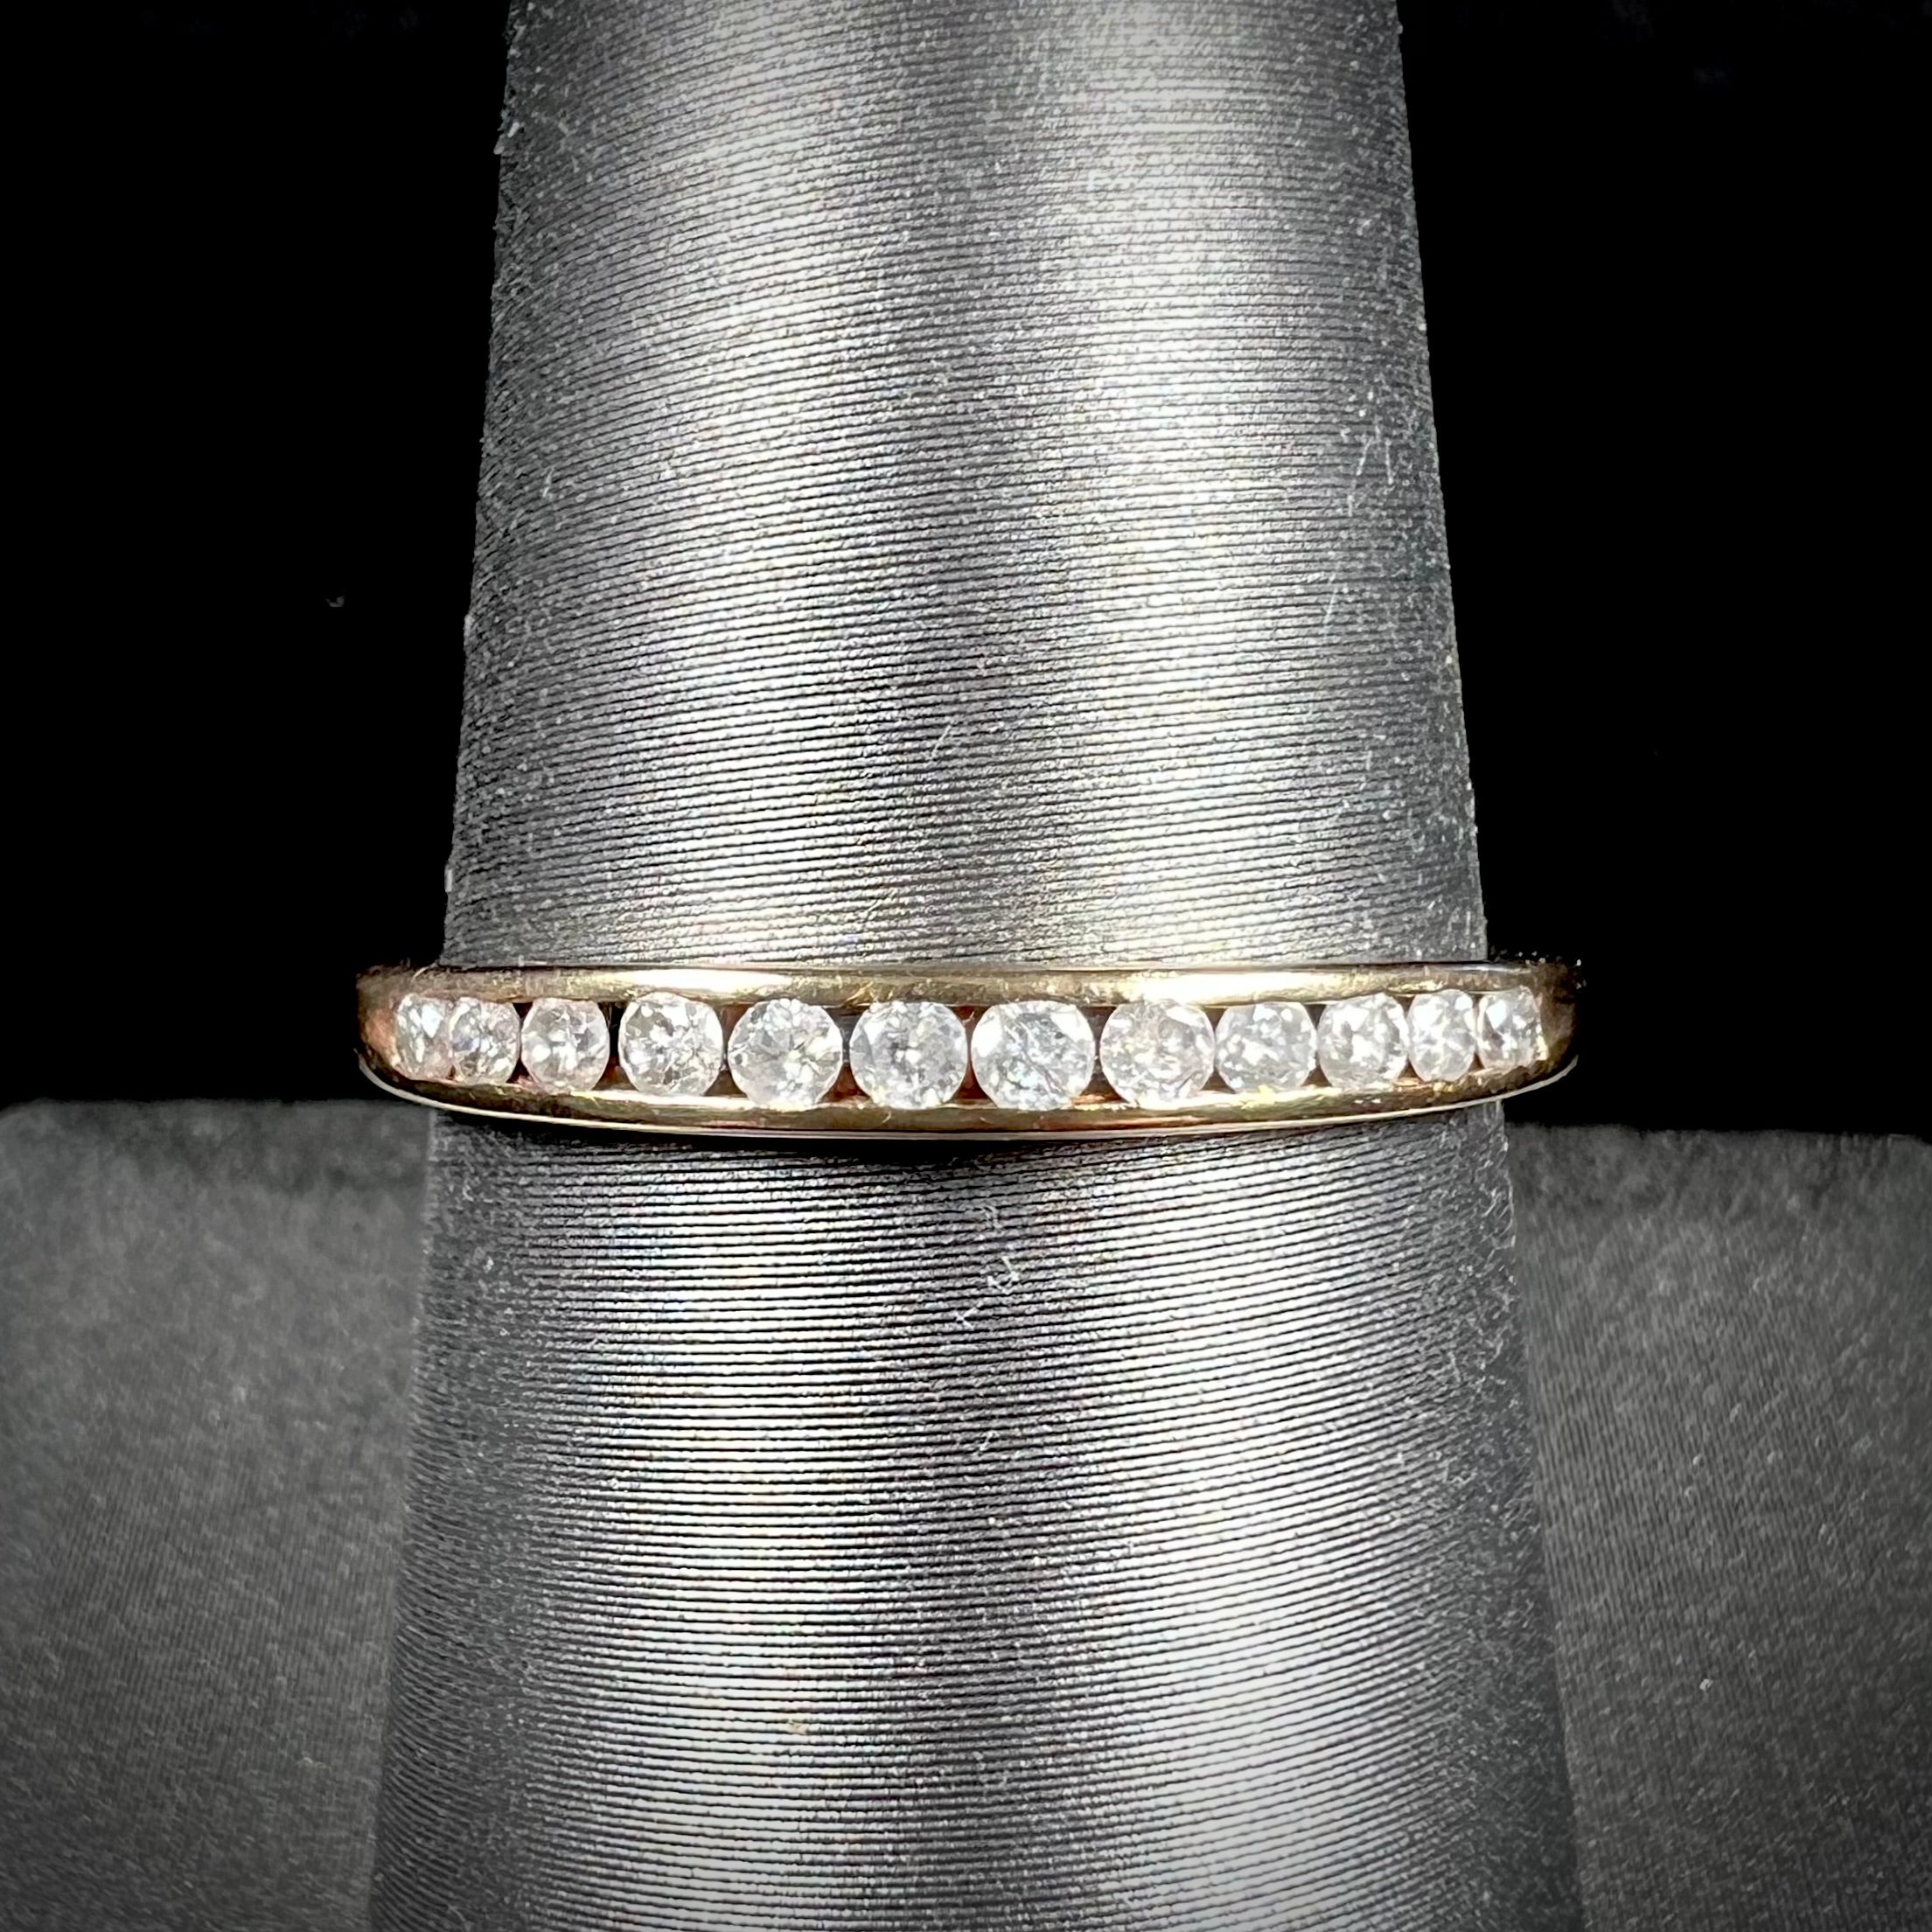 14 K Gold Men's Channel-Set Diamond Ring, Size 10.25, Appraised $2650.00 |  eBay